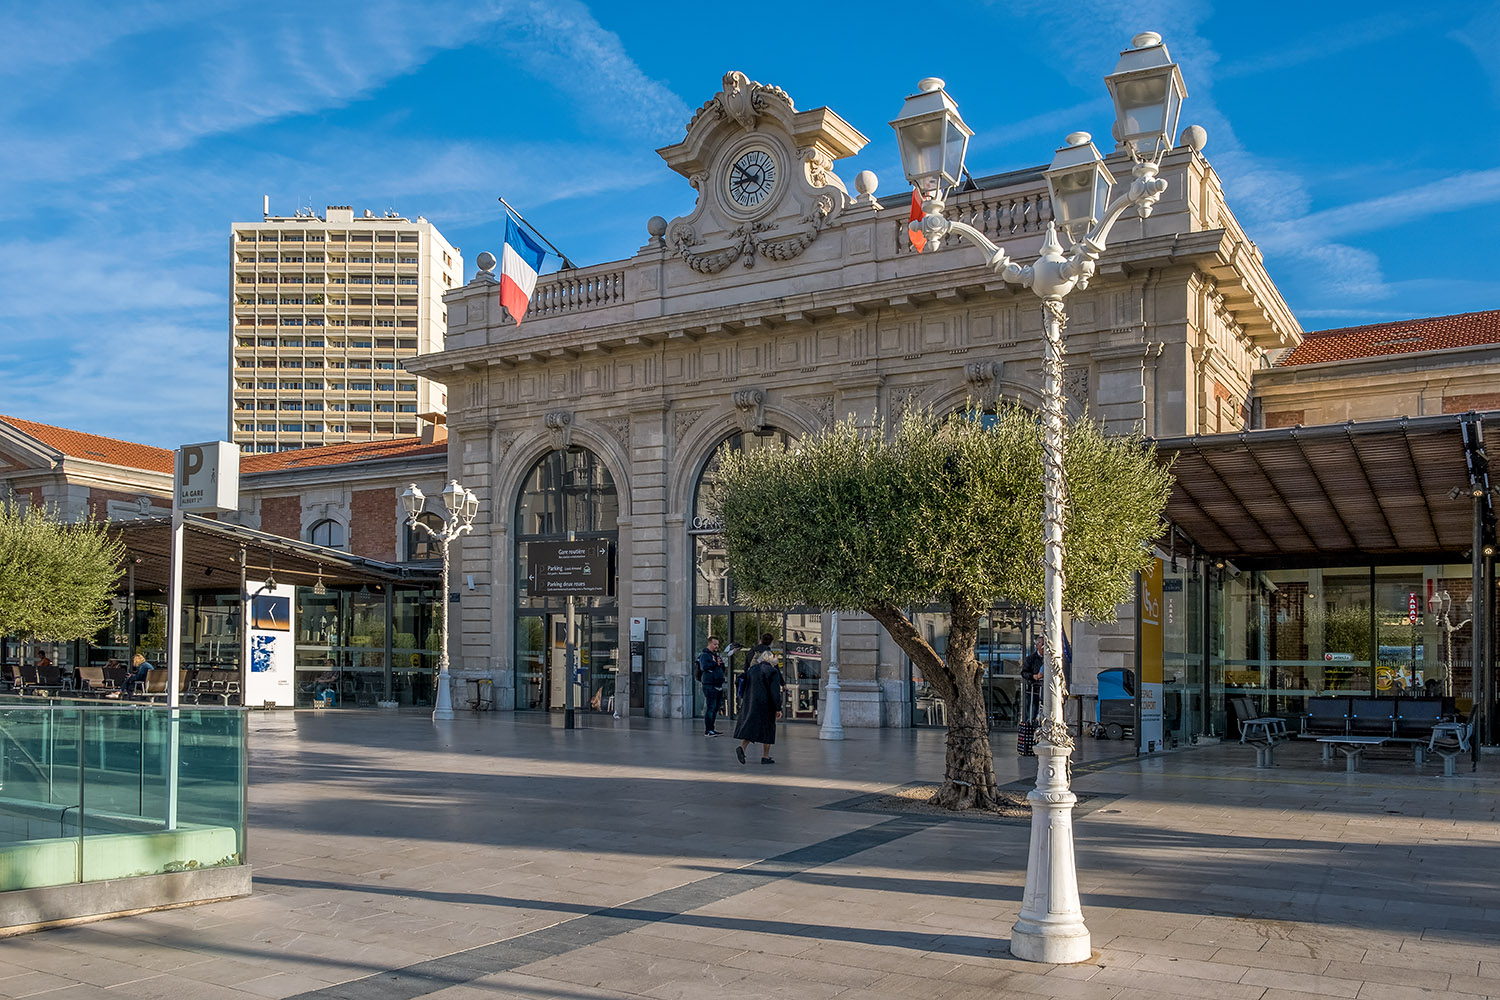 The Toulon train station